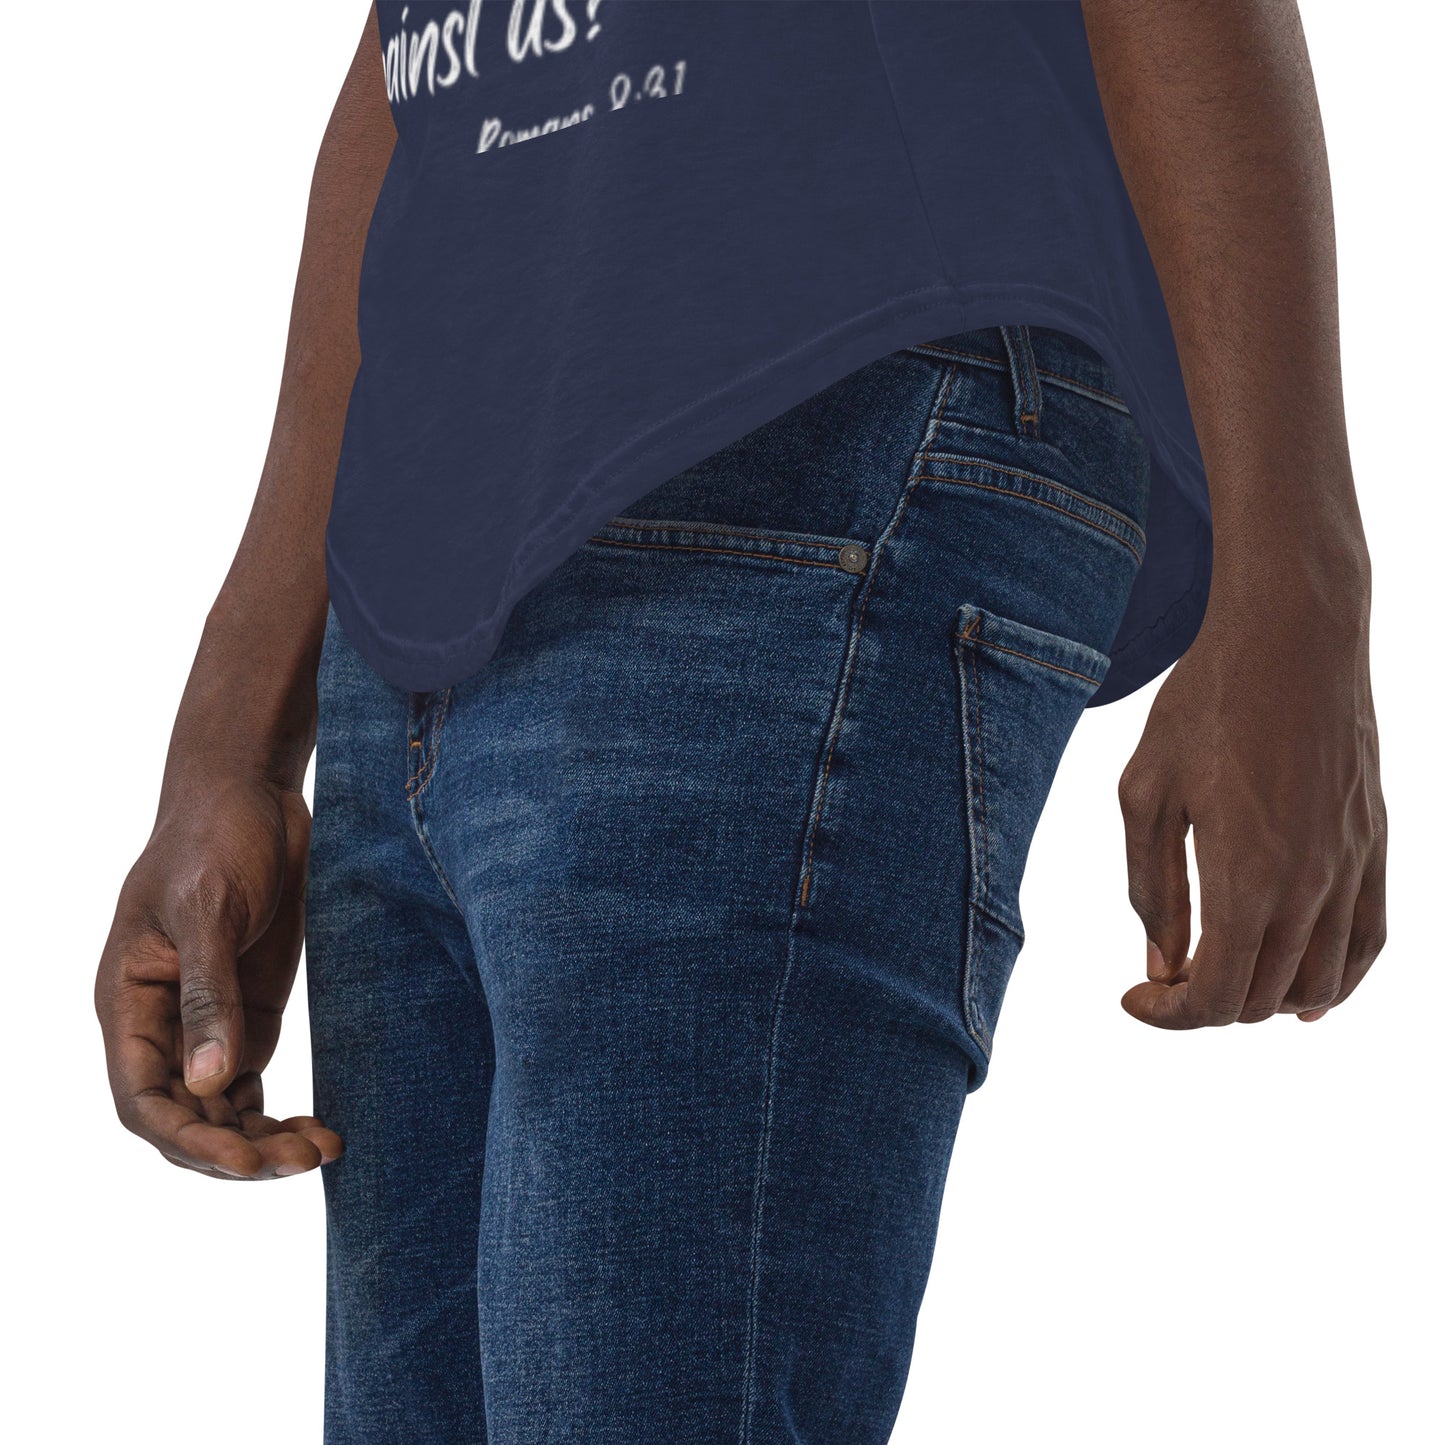 Men's Curved Hem T-Shirt